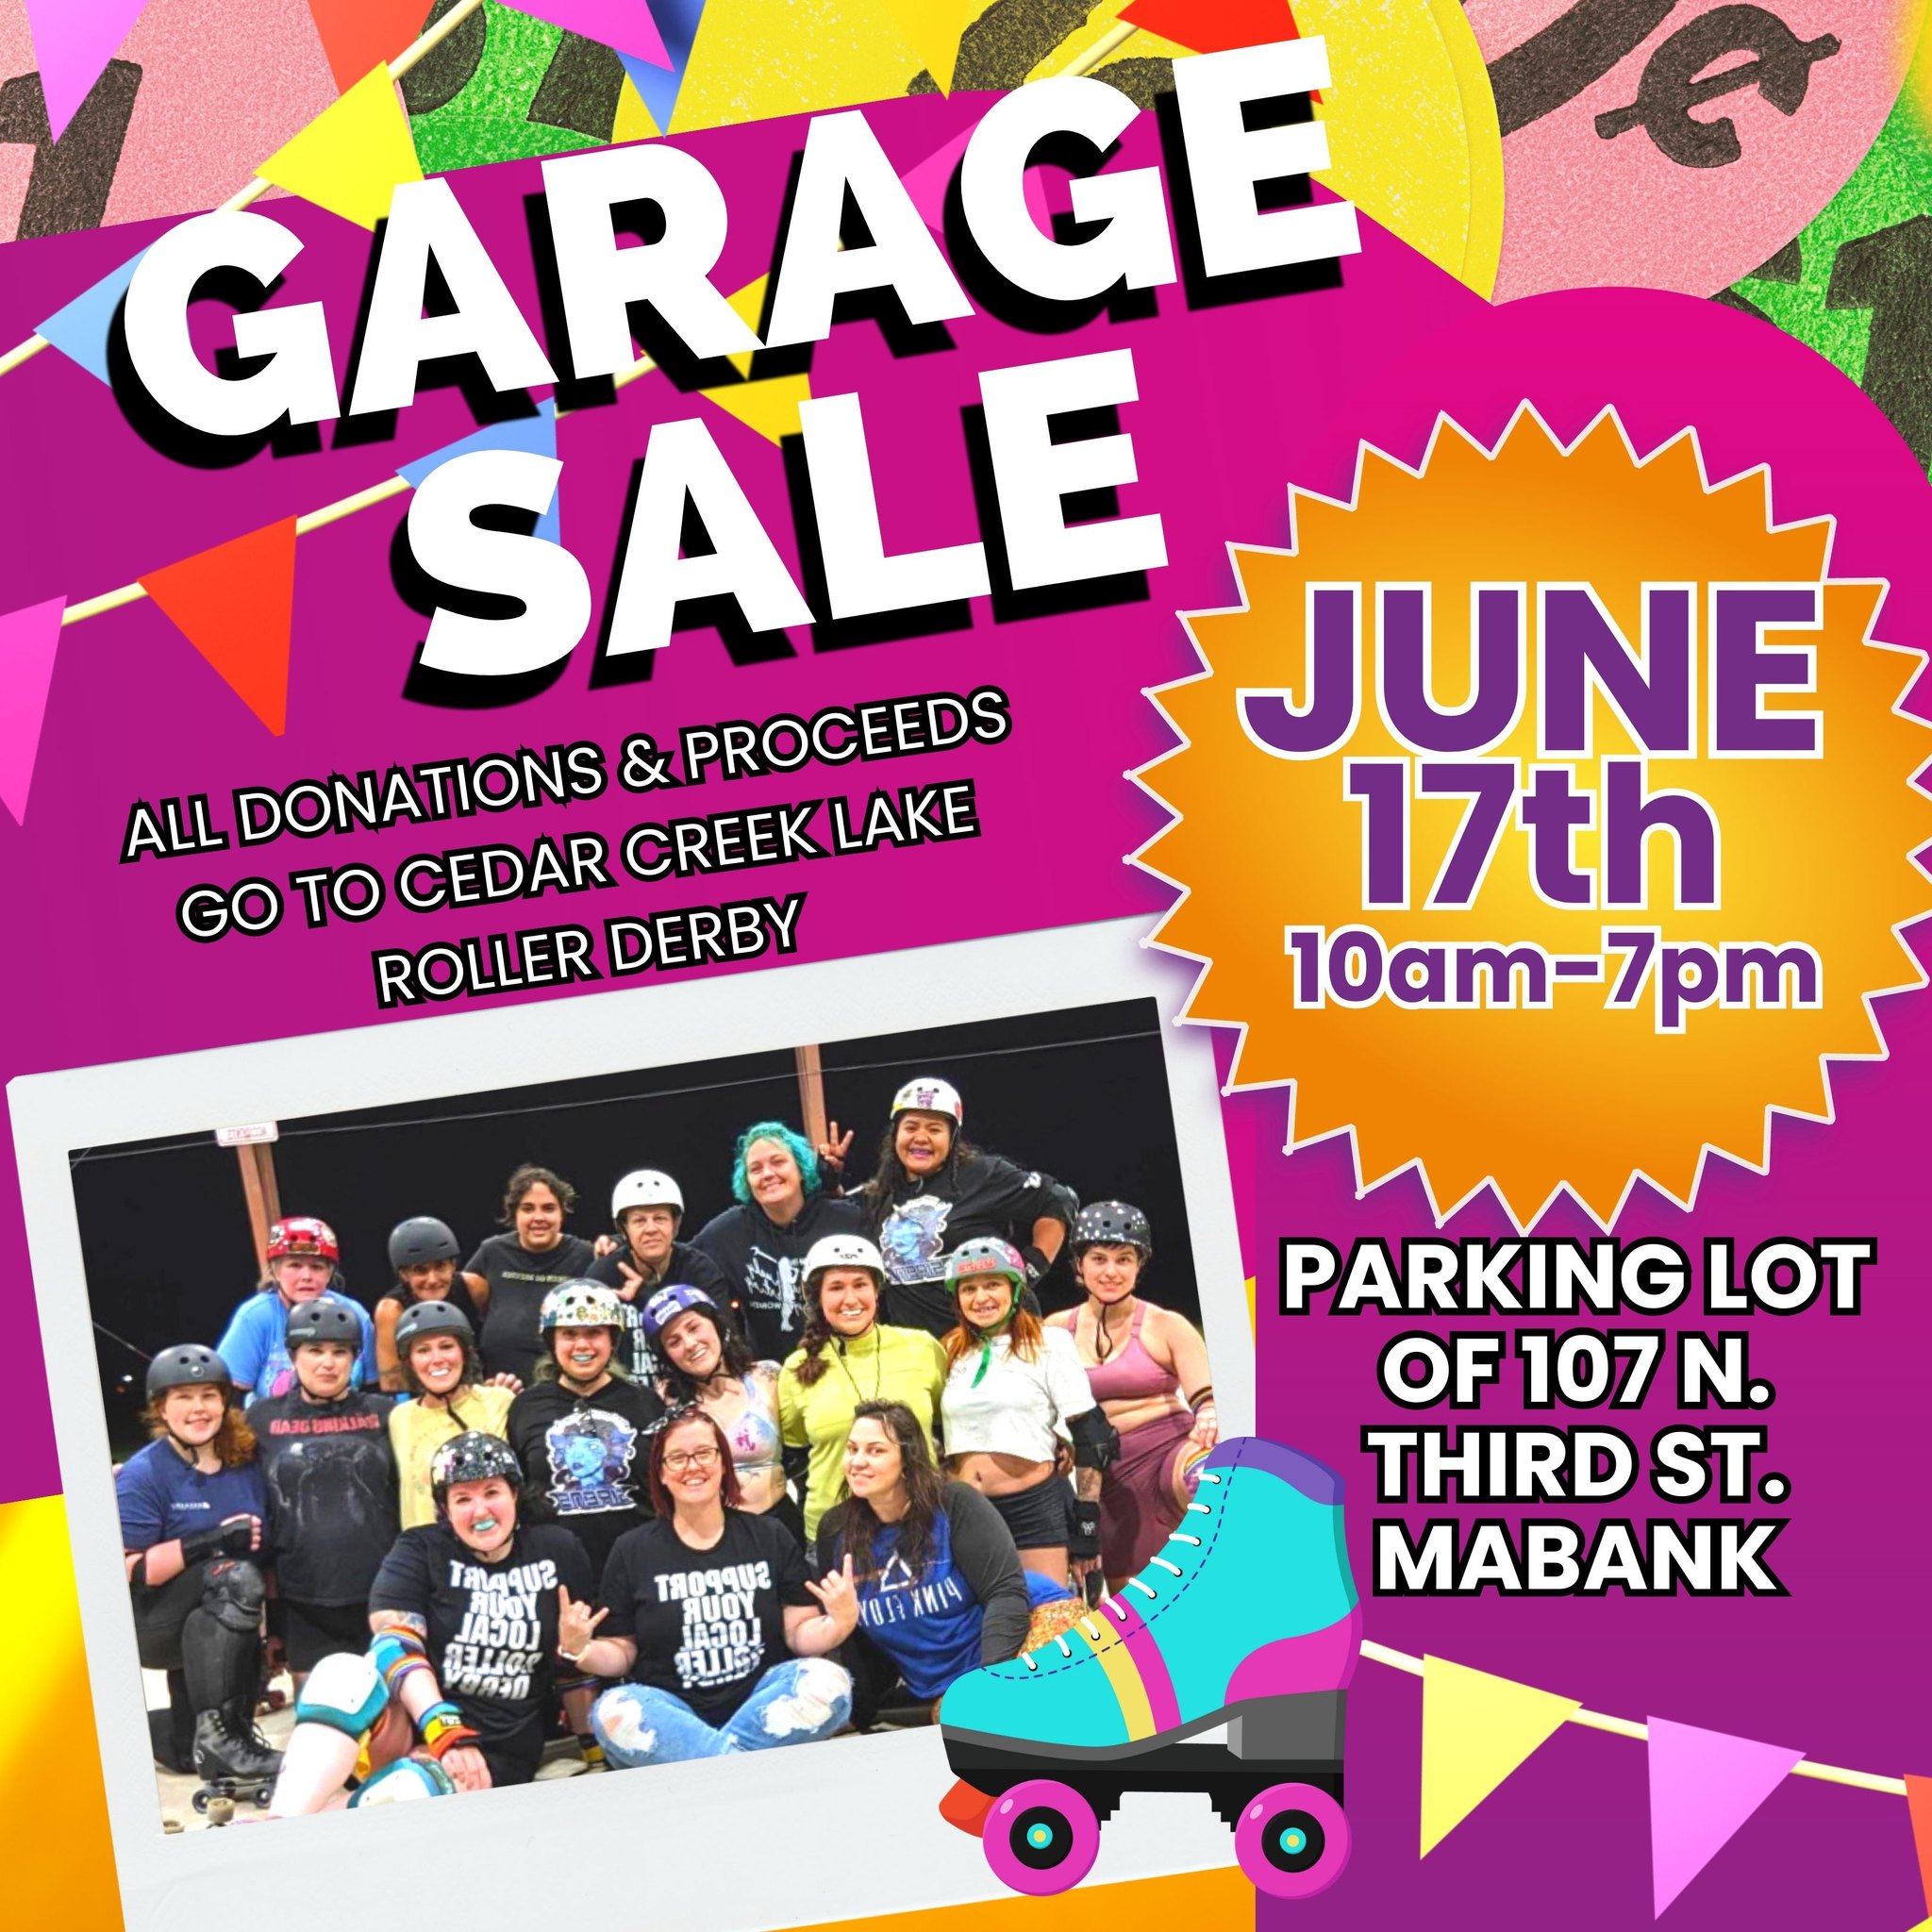 Garage Sale Fundraiser - Cedar Creek Lake Roller Derby - Located in MABANK 1 garage sale fundraiser CedarCreekLake.Online